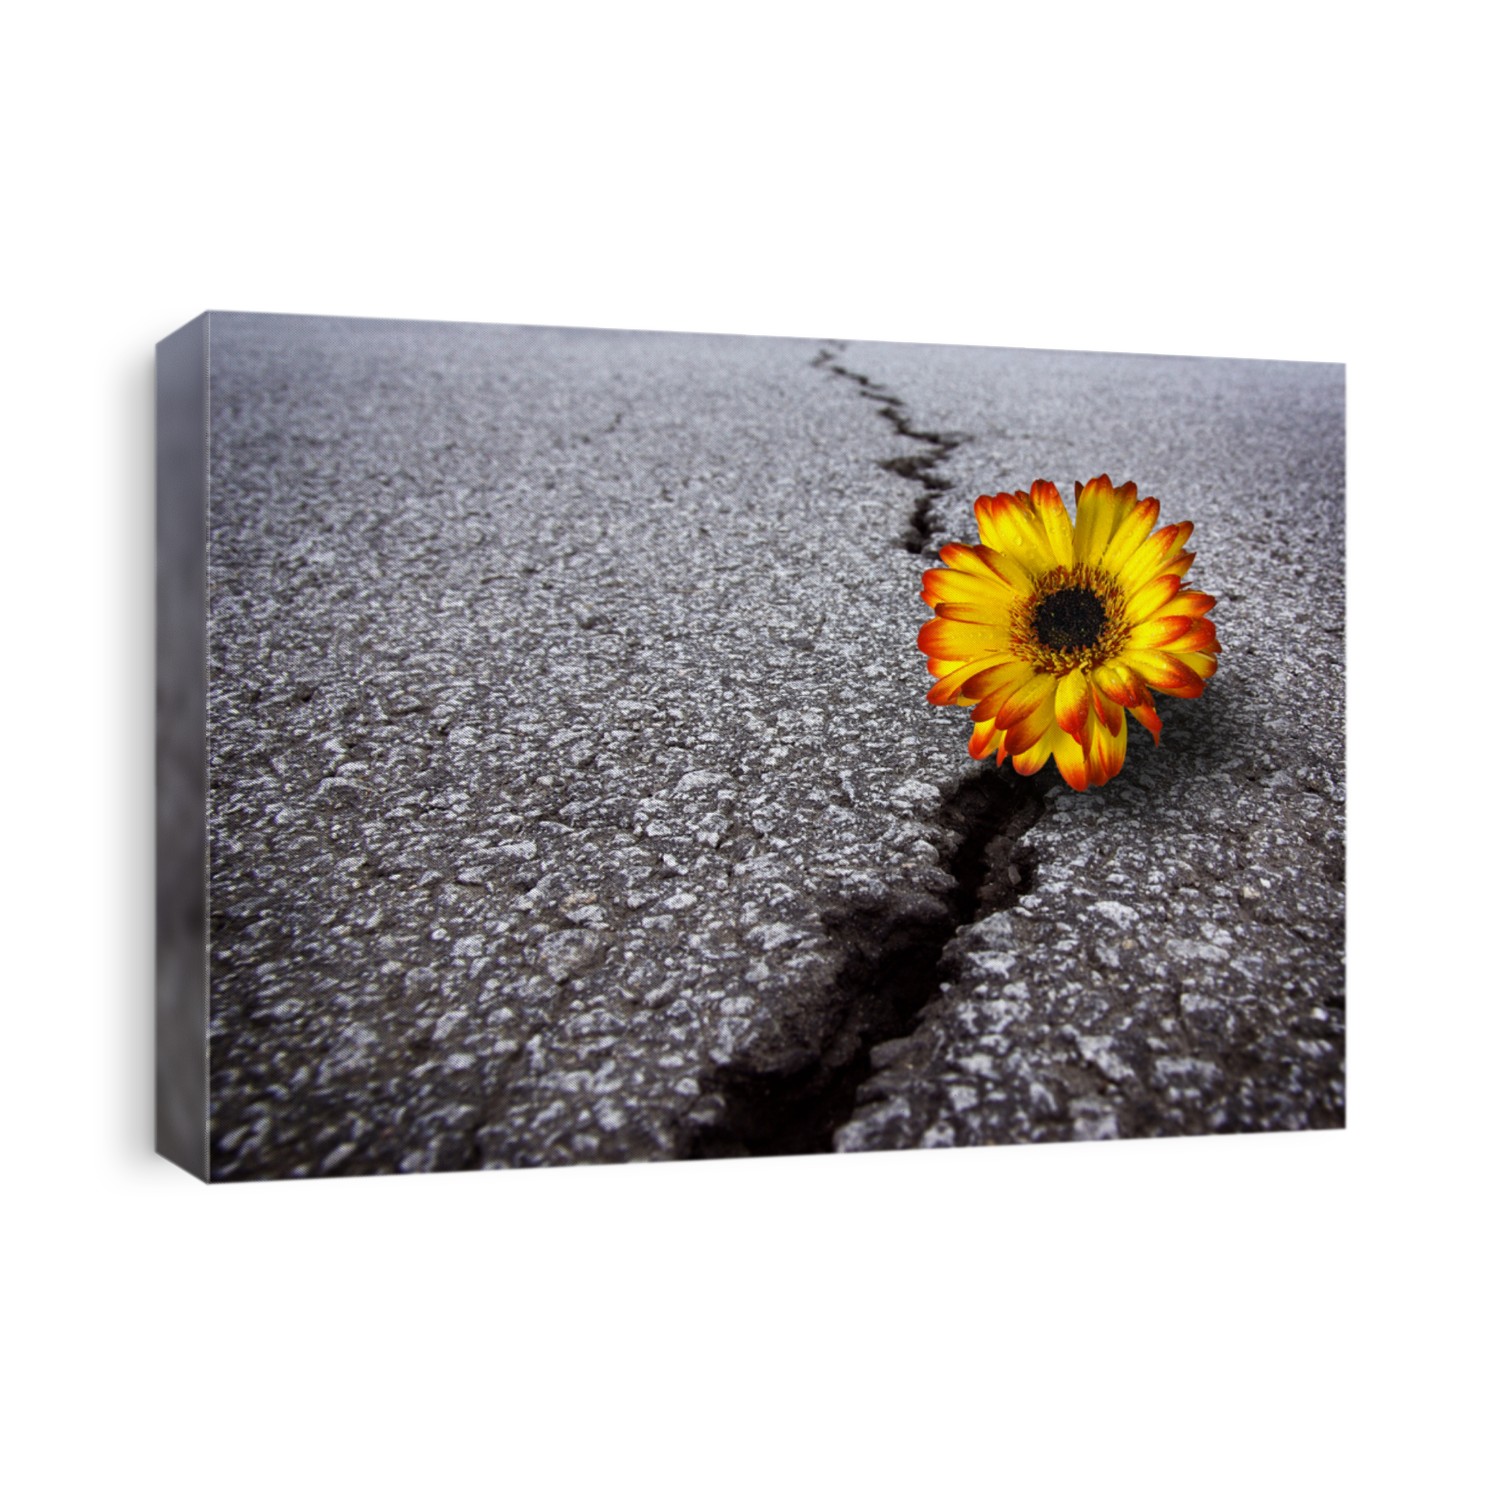 Beautiful flower growing on crack in old asphalt pavement